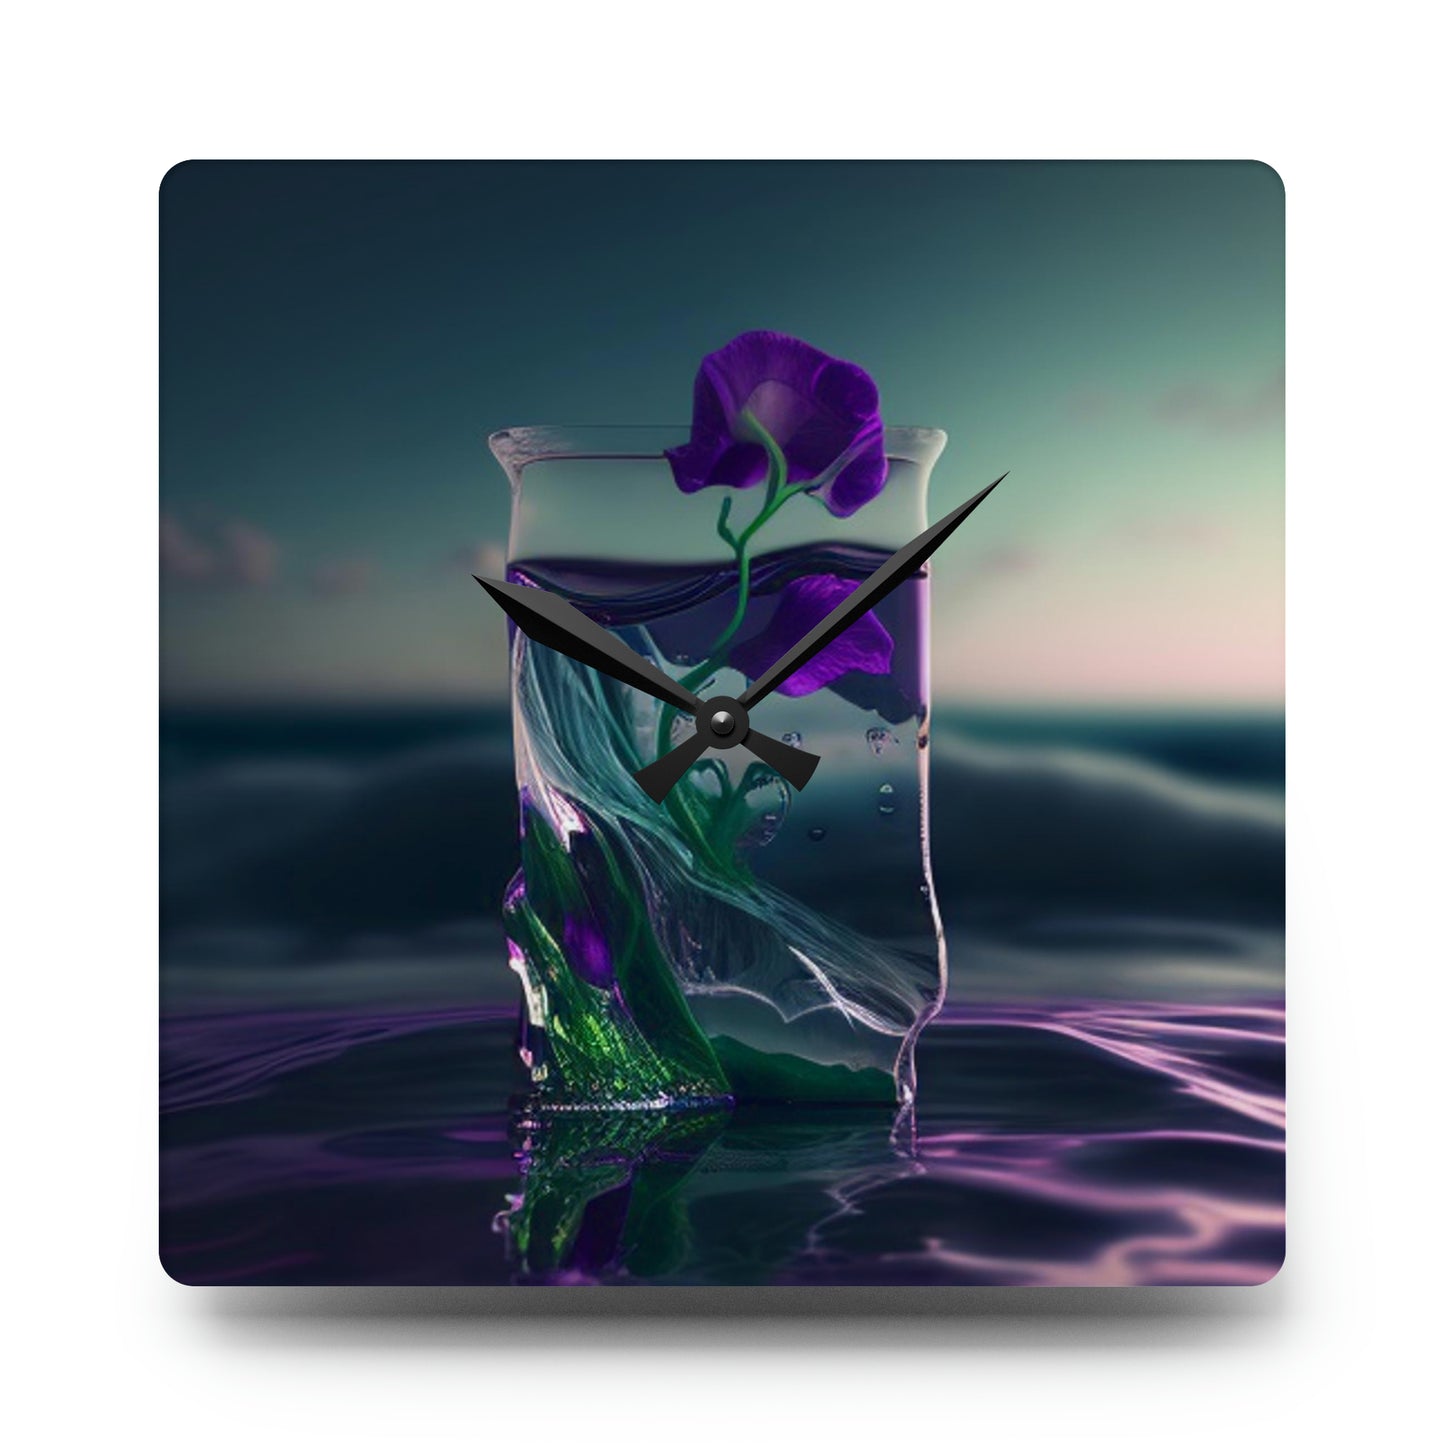 Acrylic Wall Clock Purple Sweet pea in a vase 3